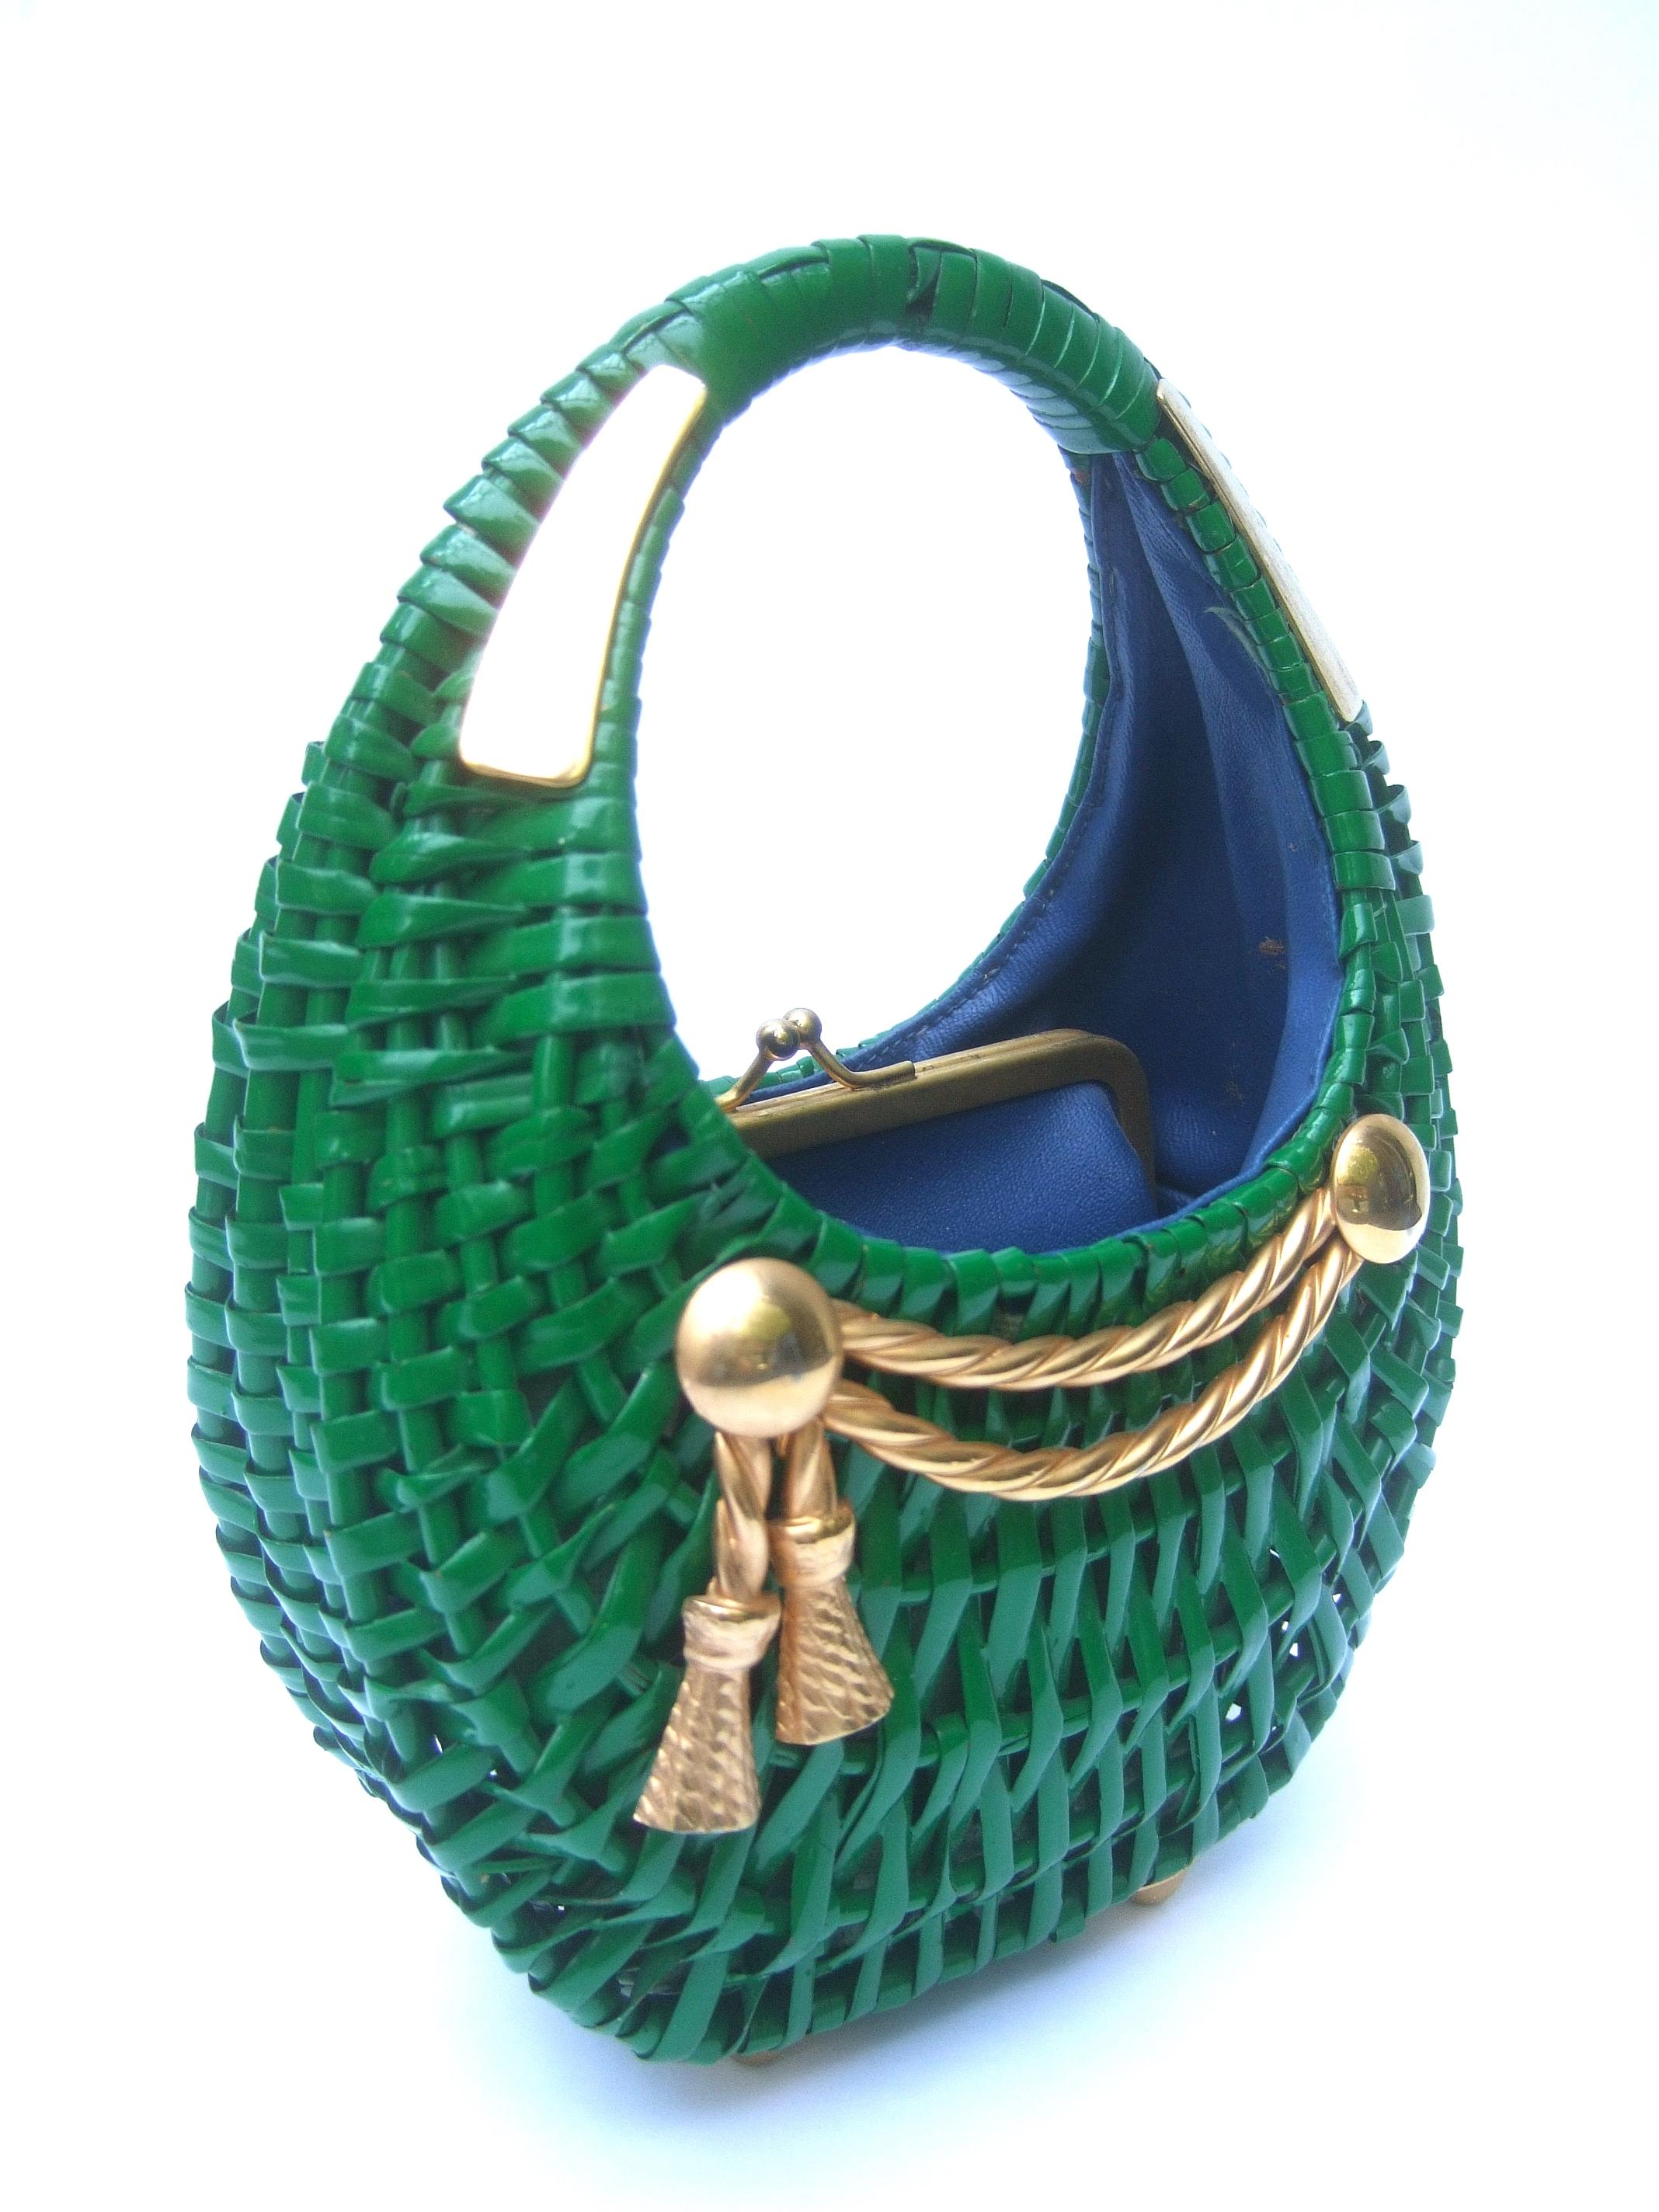 1970s Italian Kelly Green Wicker Diminutive Basket Shaped Handbag  4